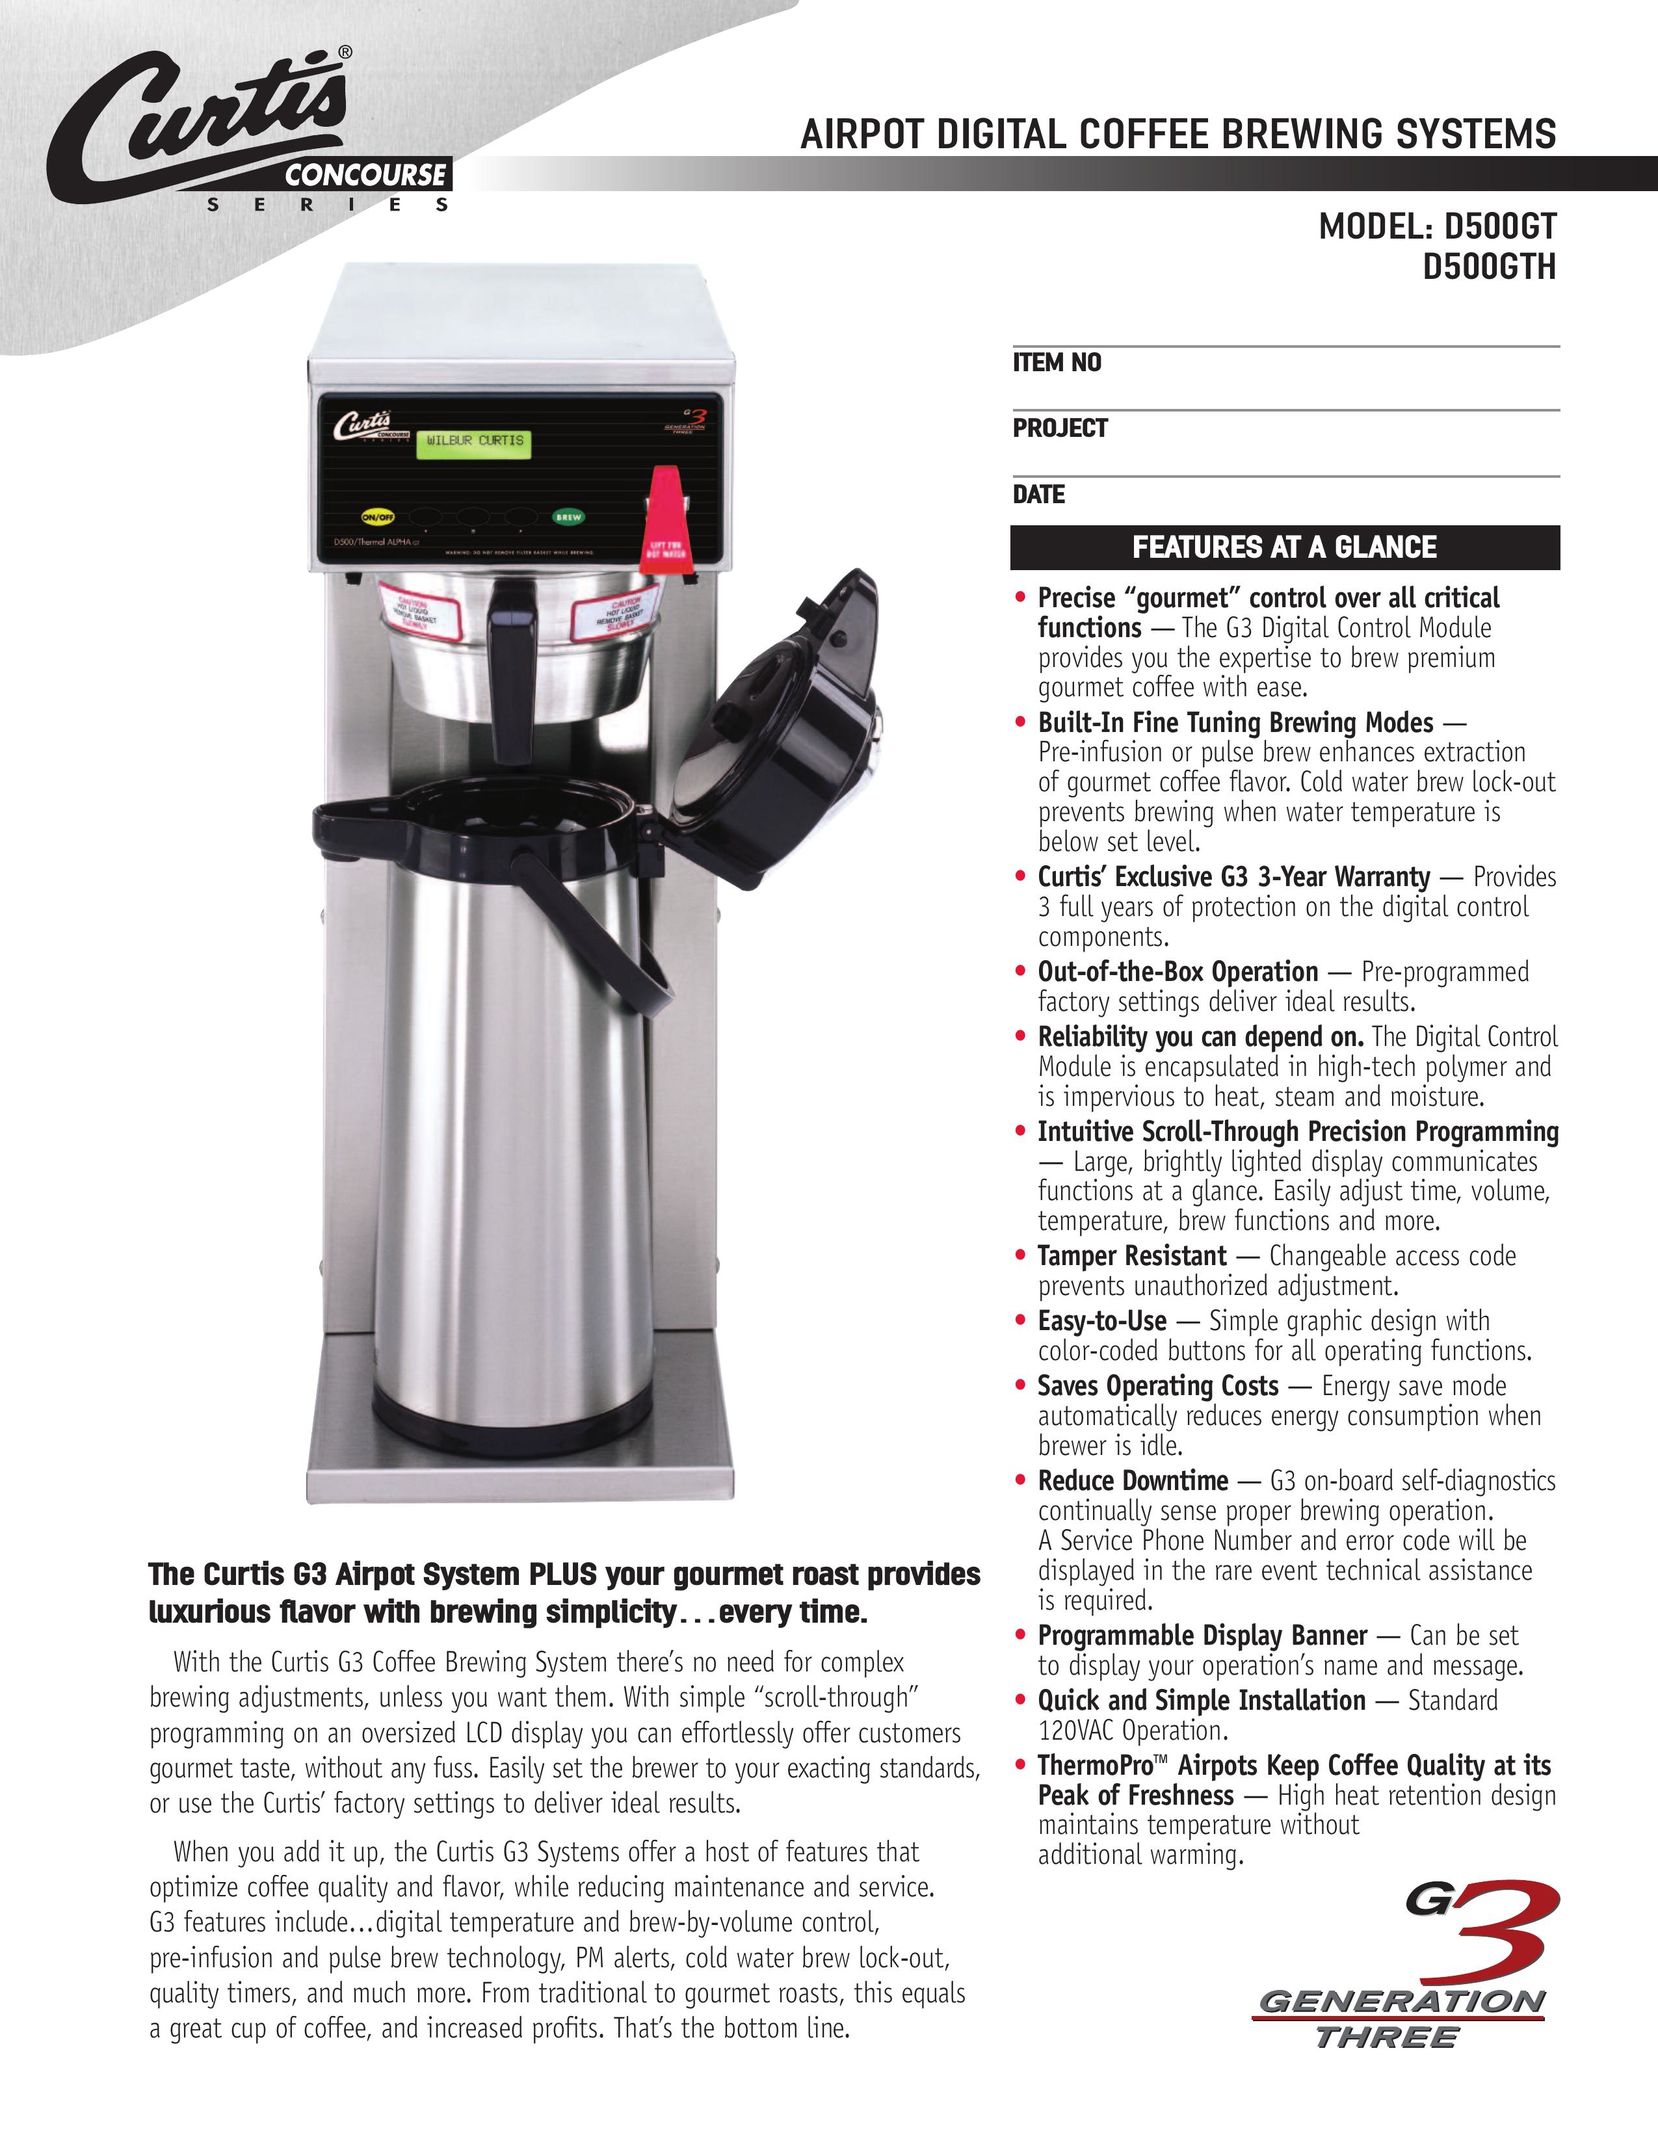 Wibur Curtis Company D500GTH Coffeemaker User Manual